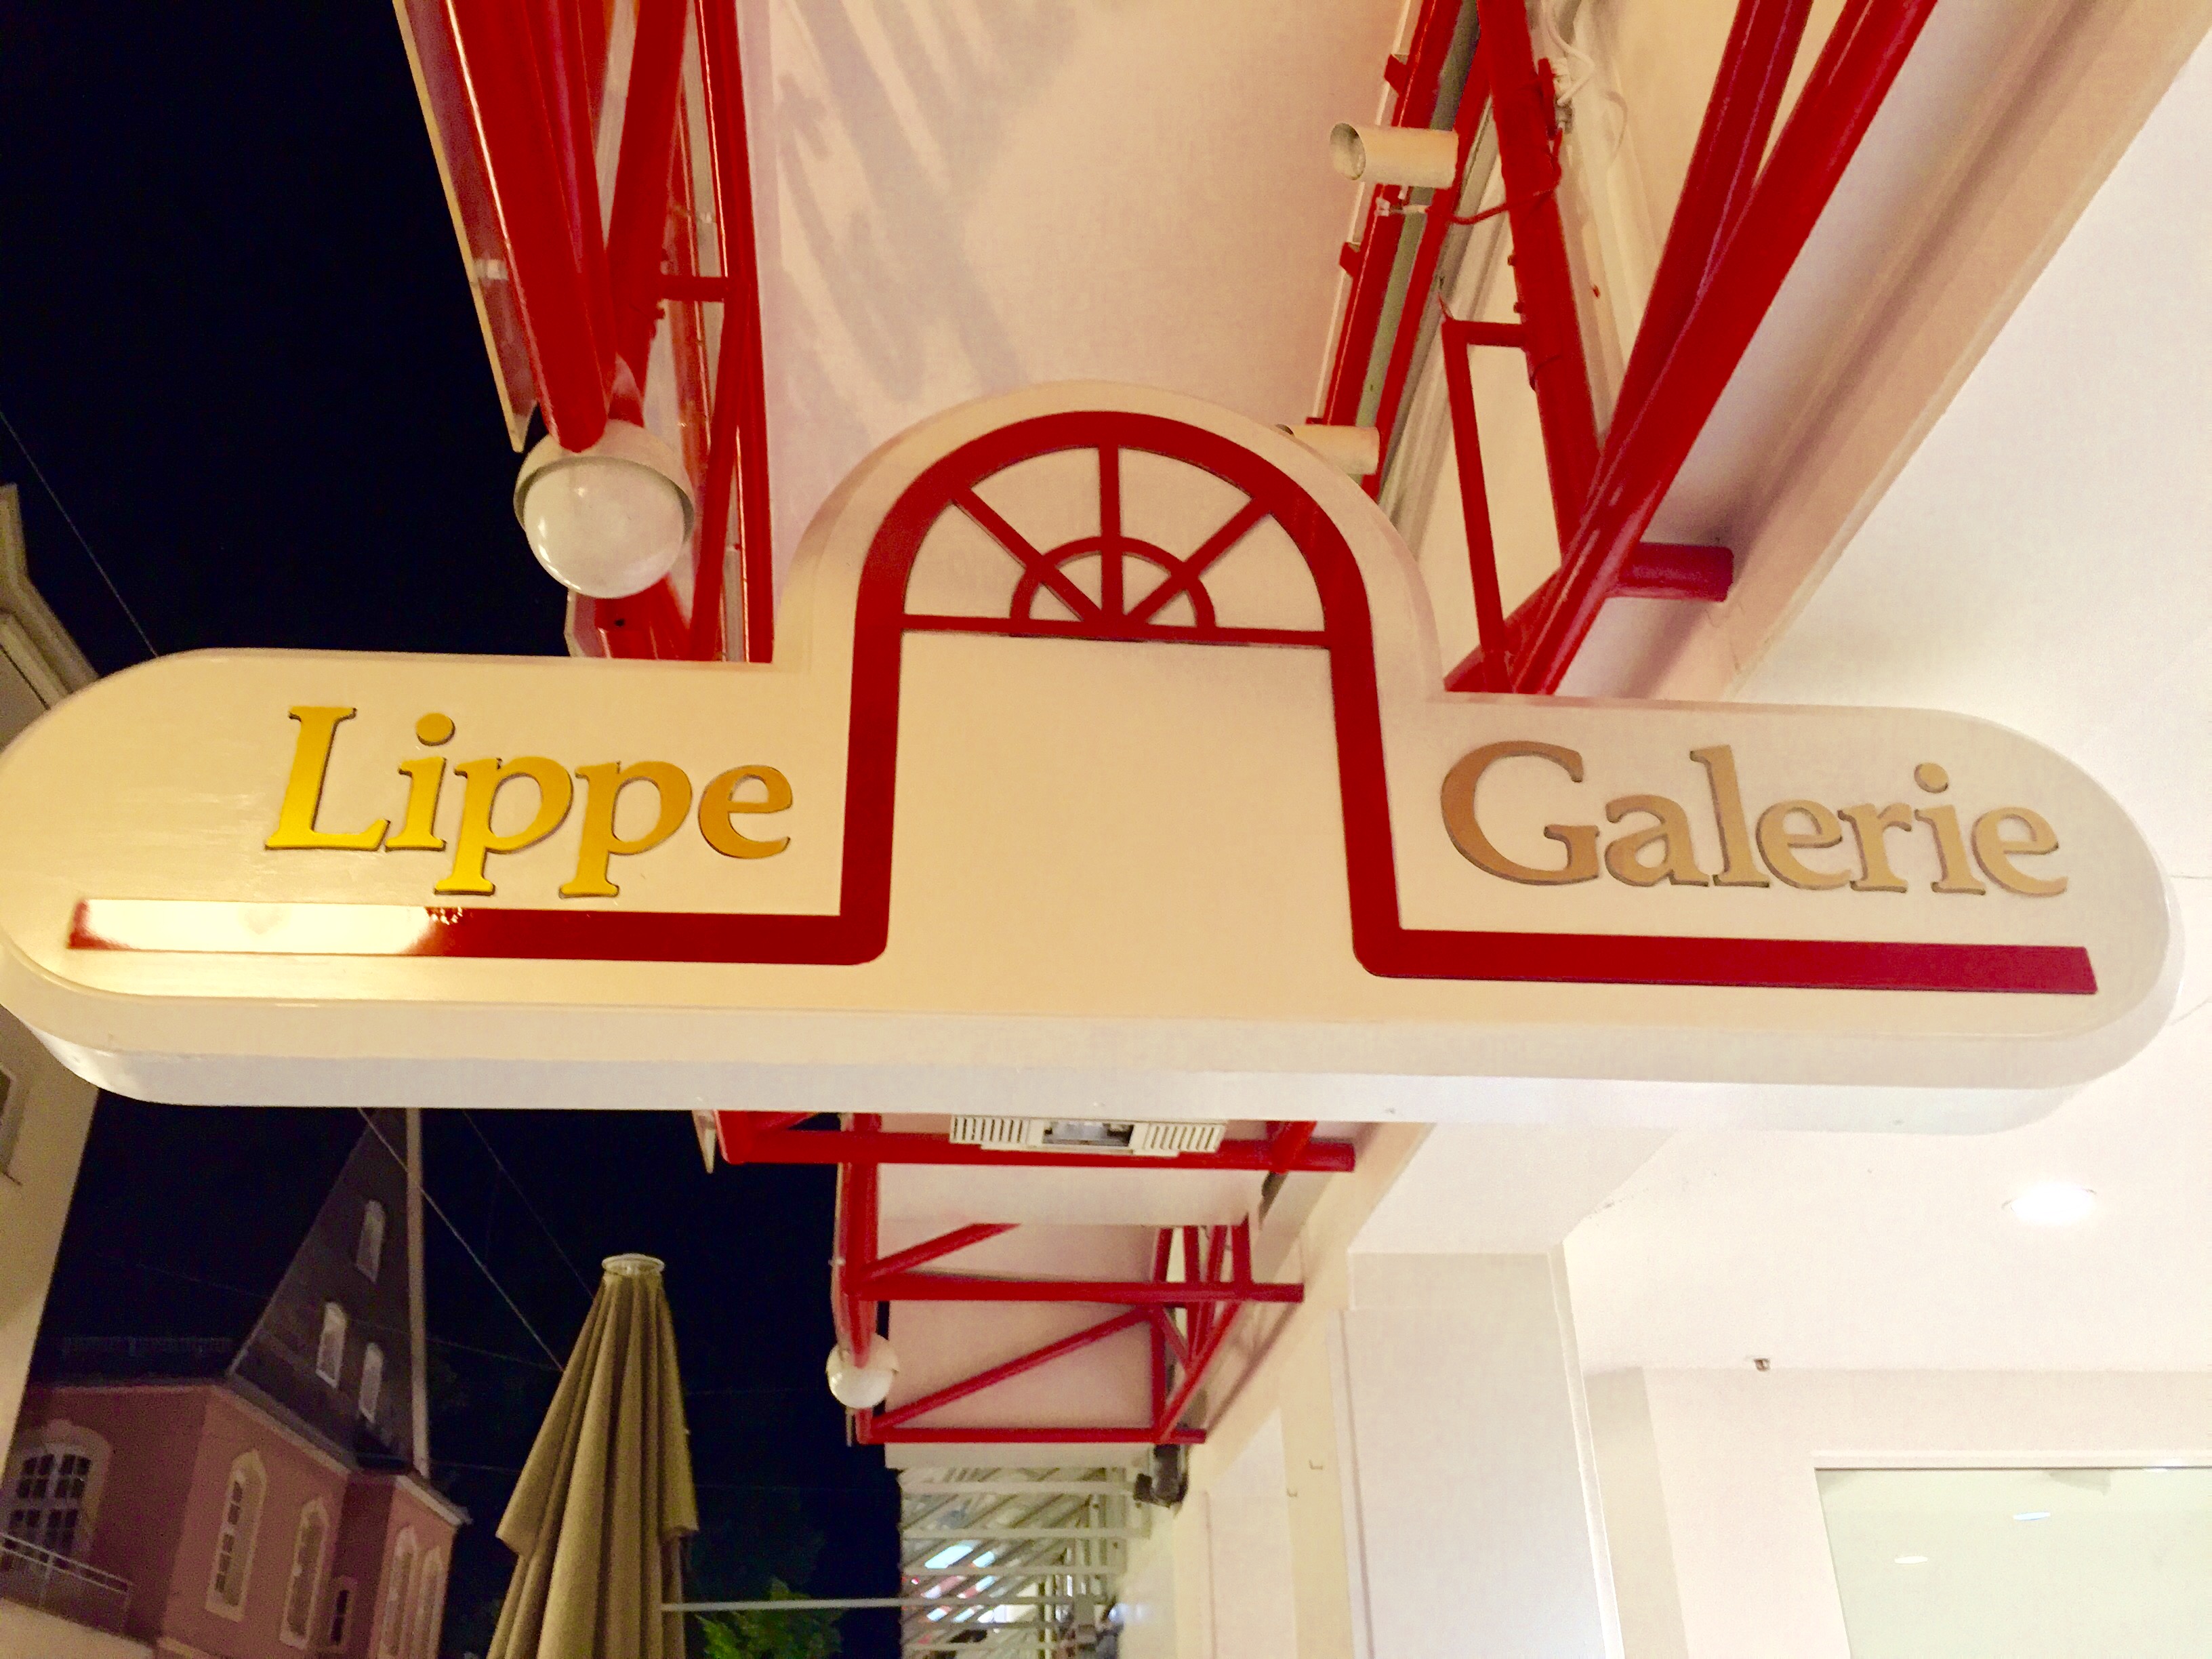 Lippe Galerie - Shoppingcenter Lippstadt - Unterkünfte in der Nähe